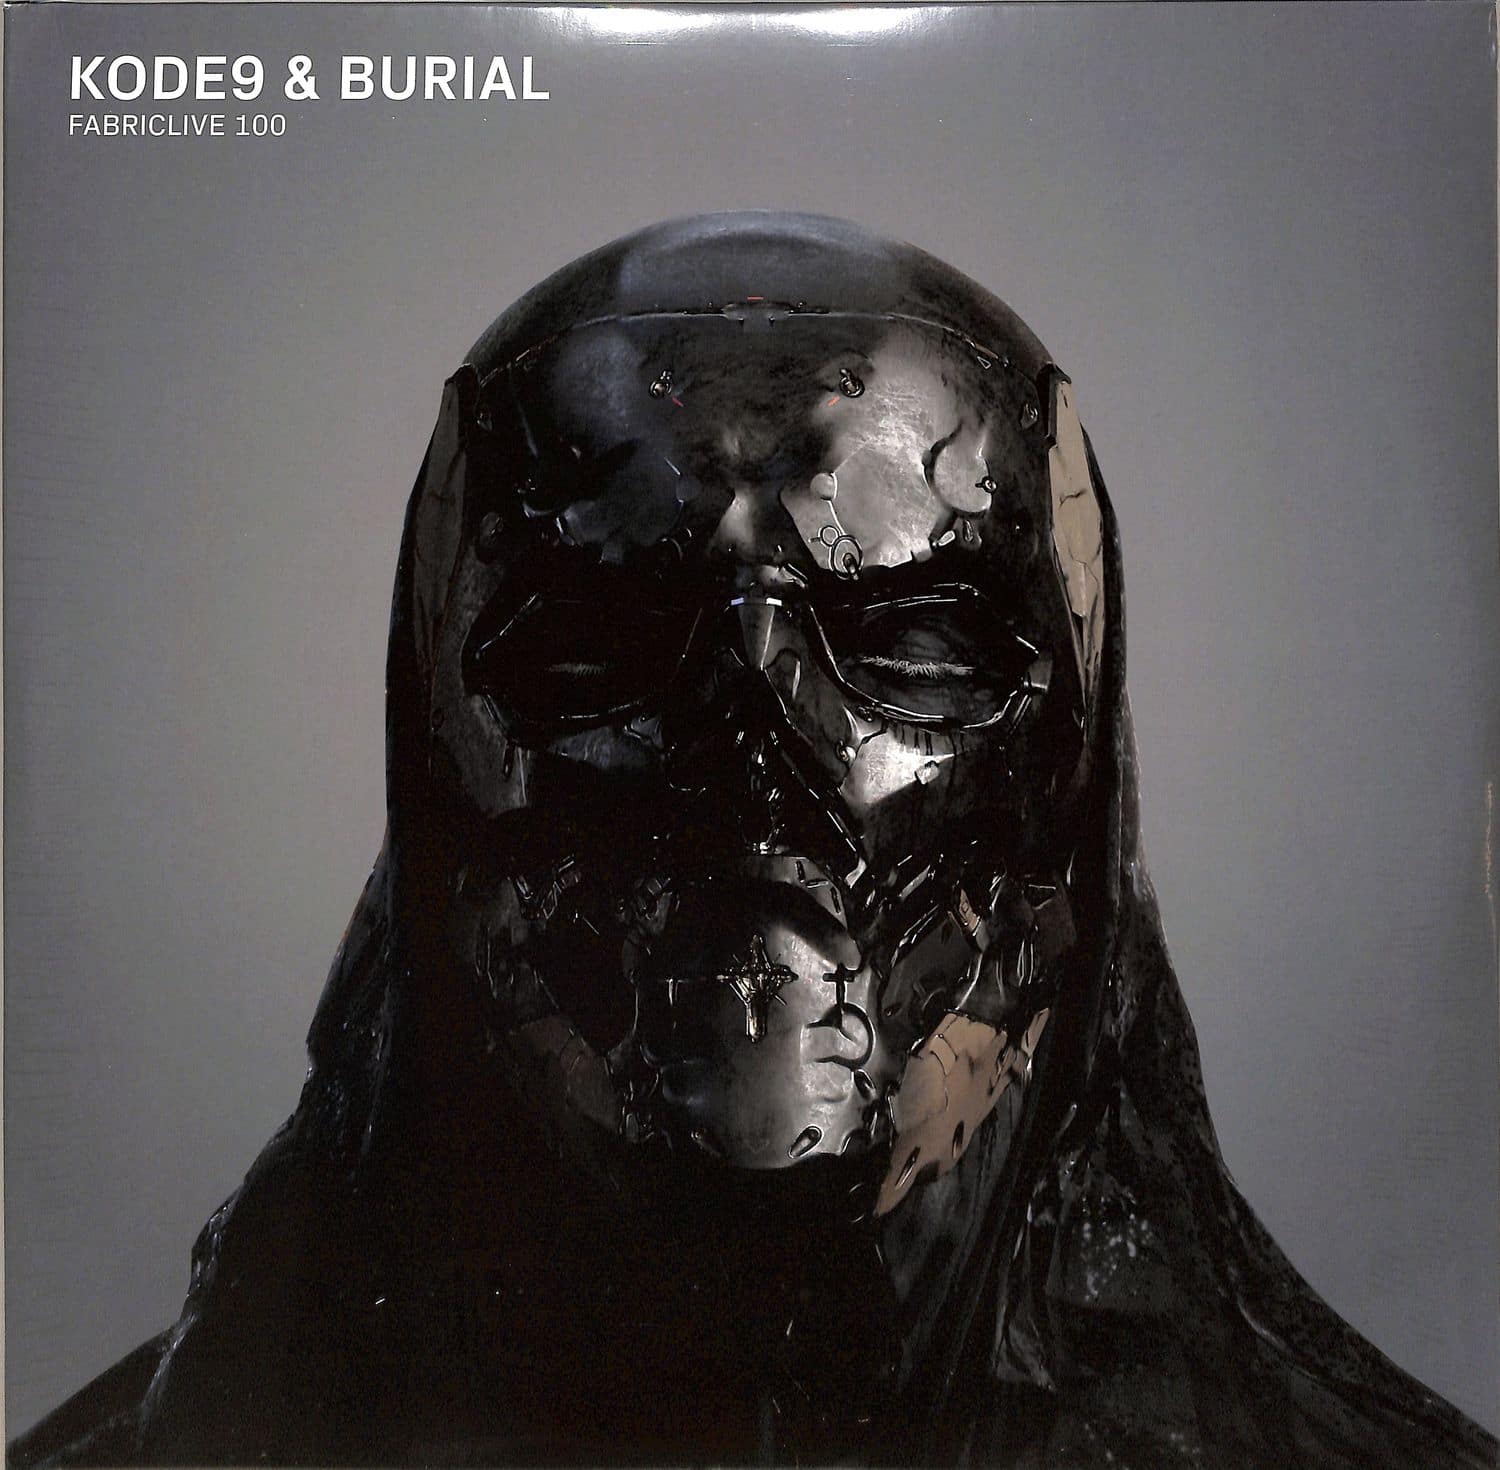 Kode9 & Burial - Fabric Live 100 